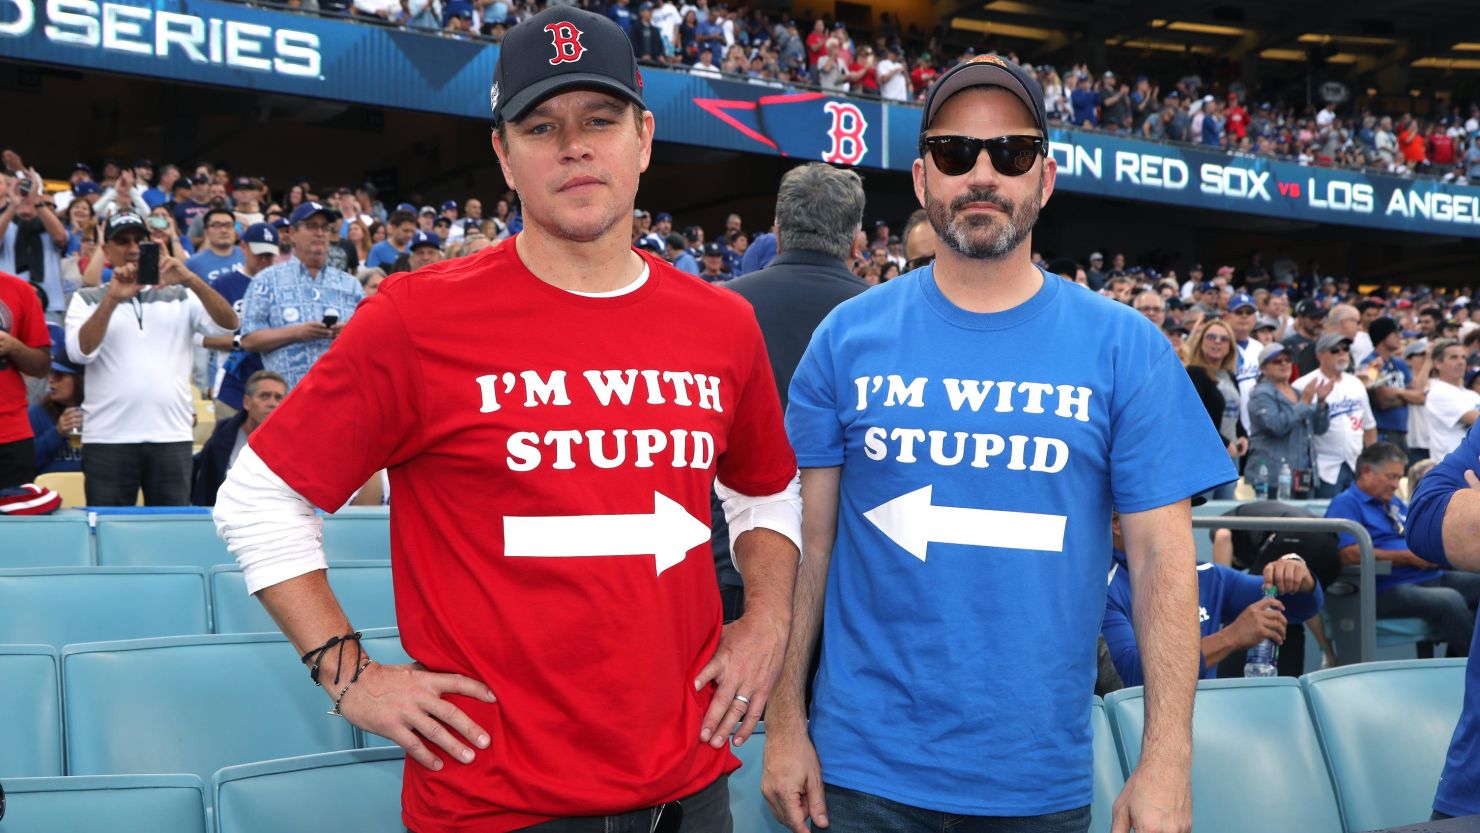 Matt Damon and Jimmy Kimmel at Sunday's World Series game